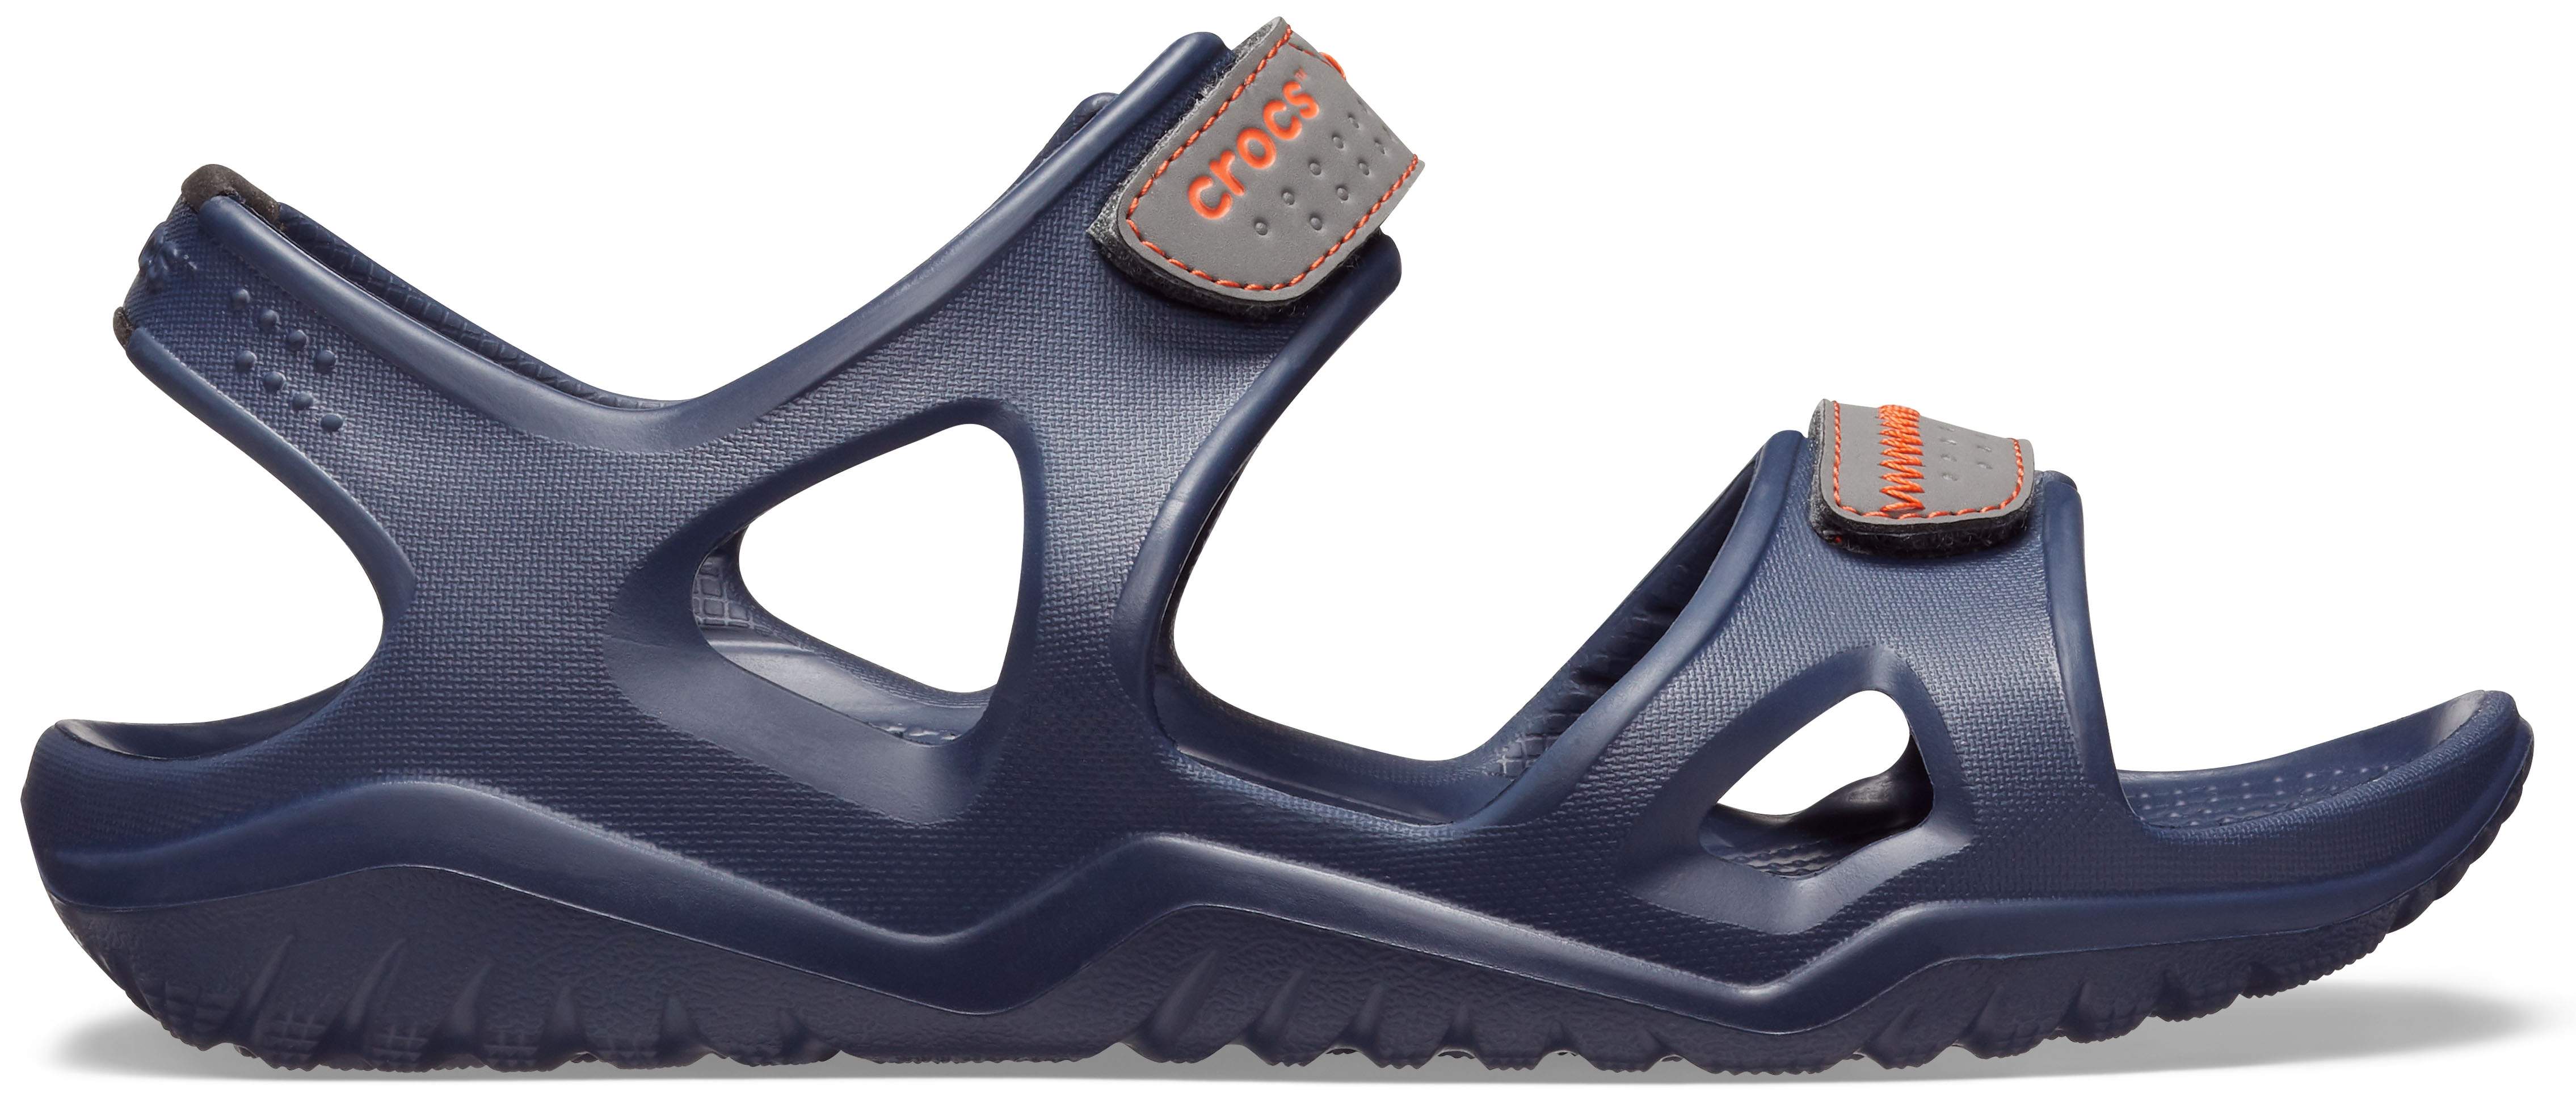 crocs men's swiftwater river sandals